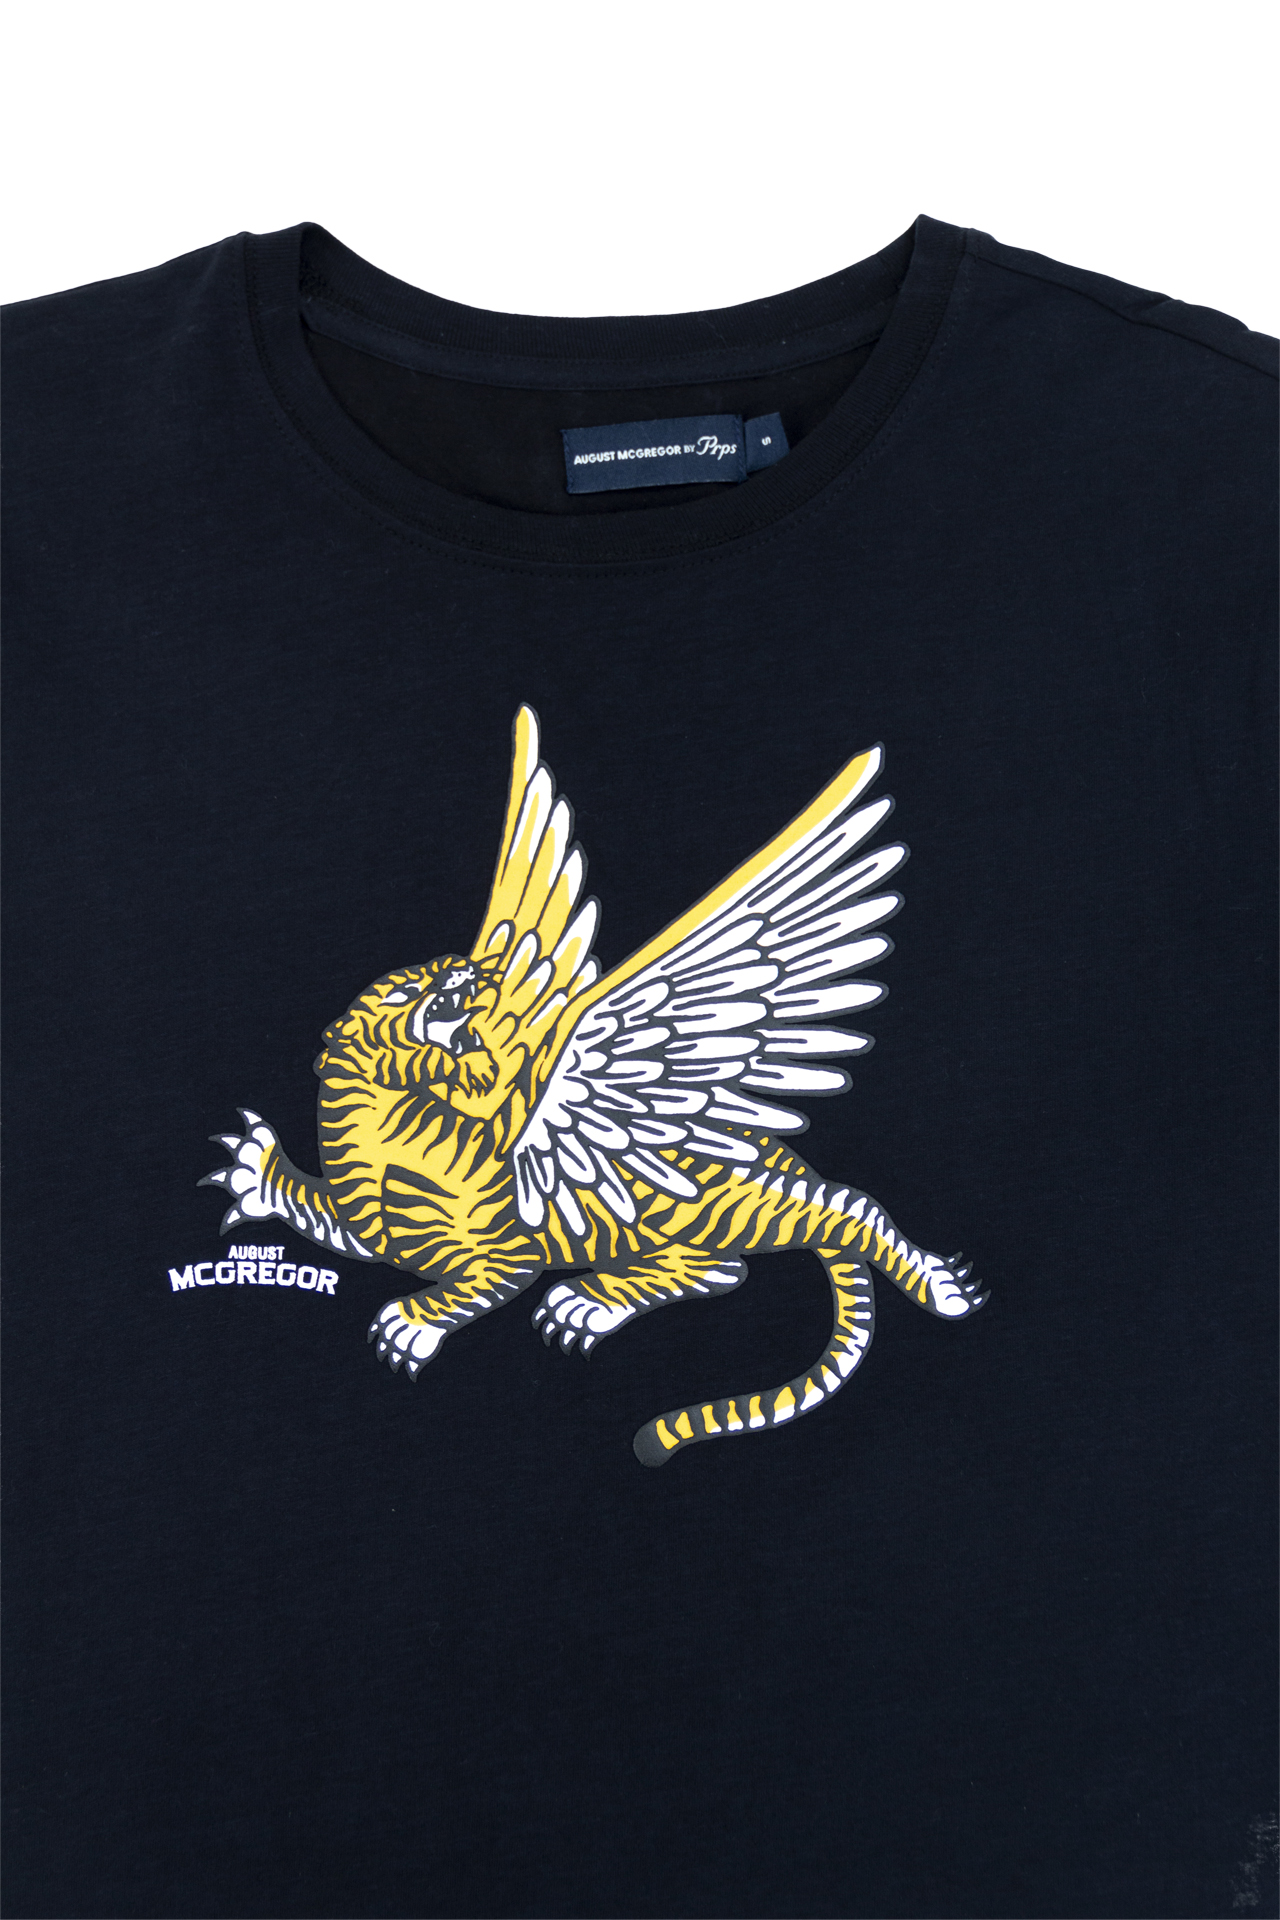 August McGregor  AM X PRPS Embroidered Flying Tiger T-Shirt in Black